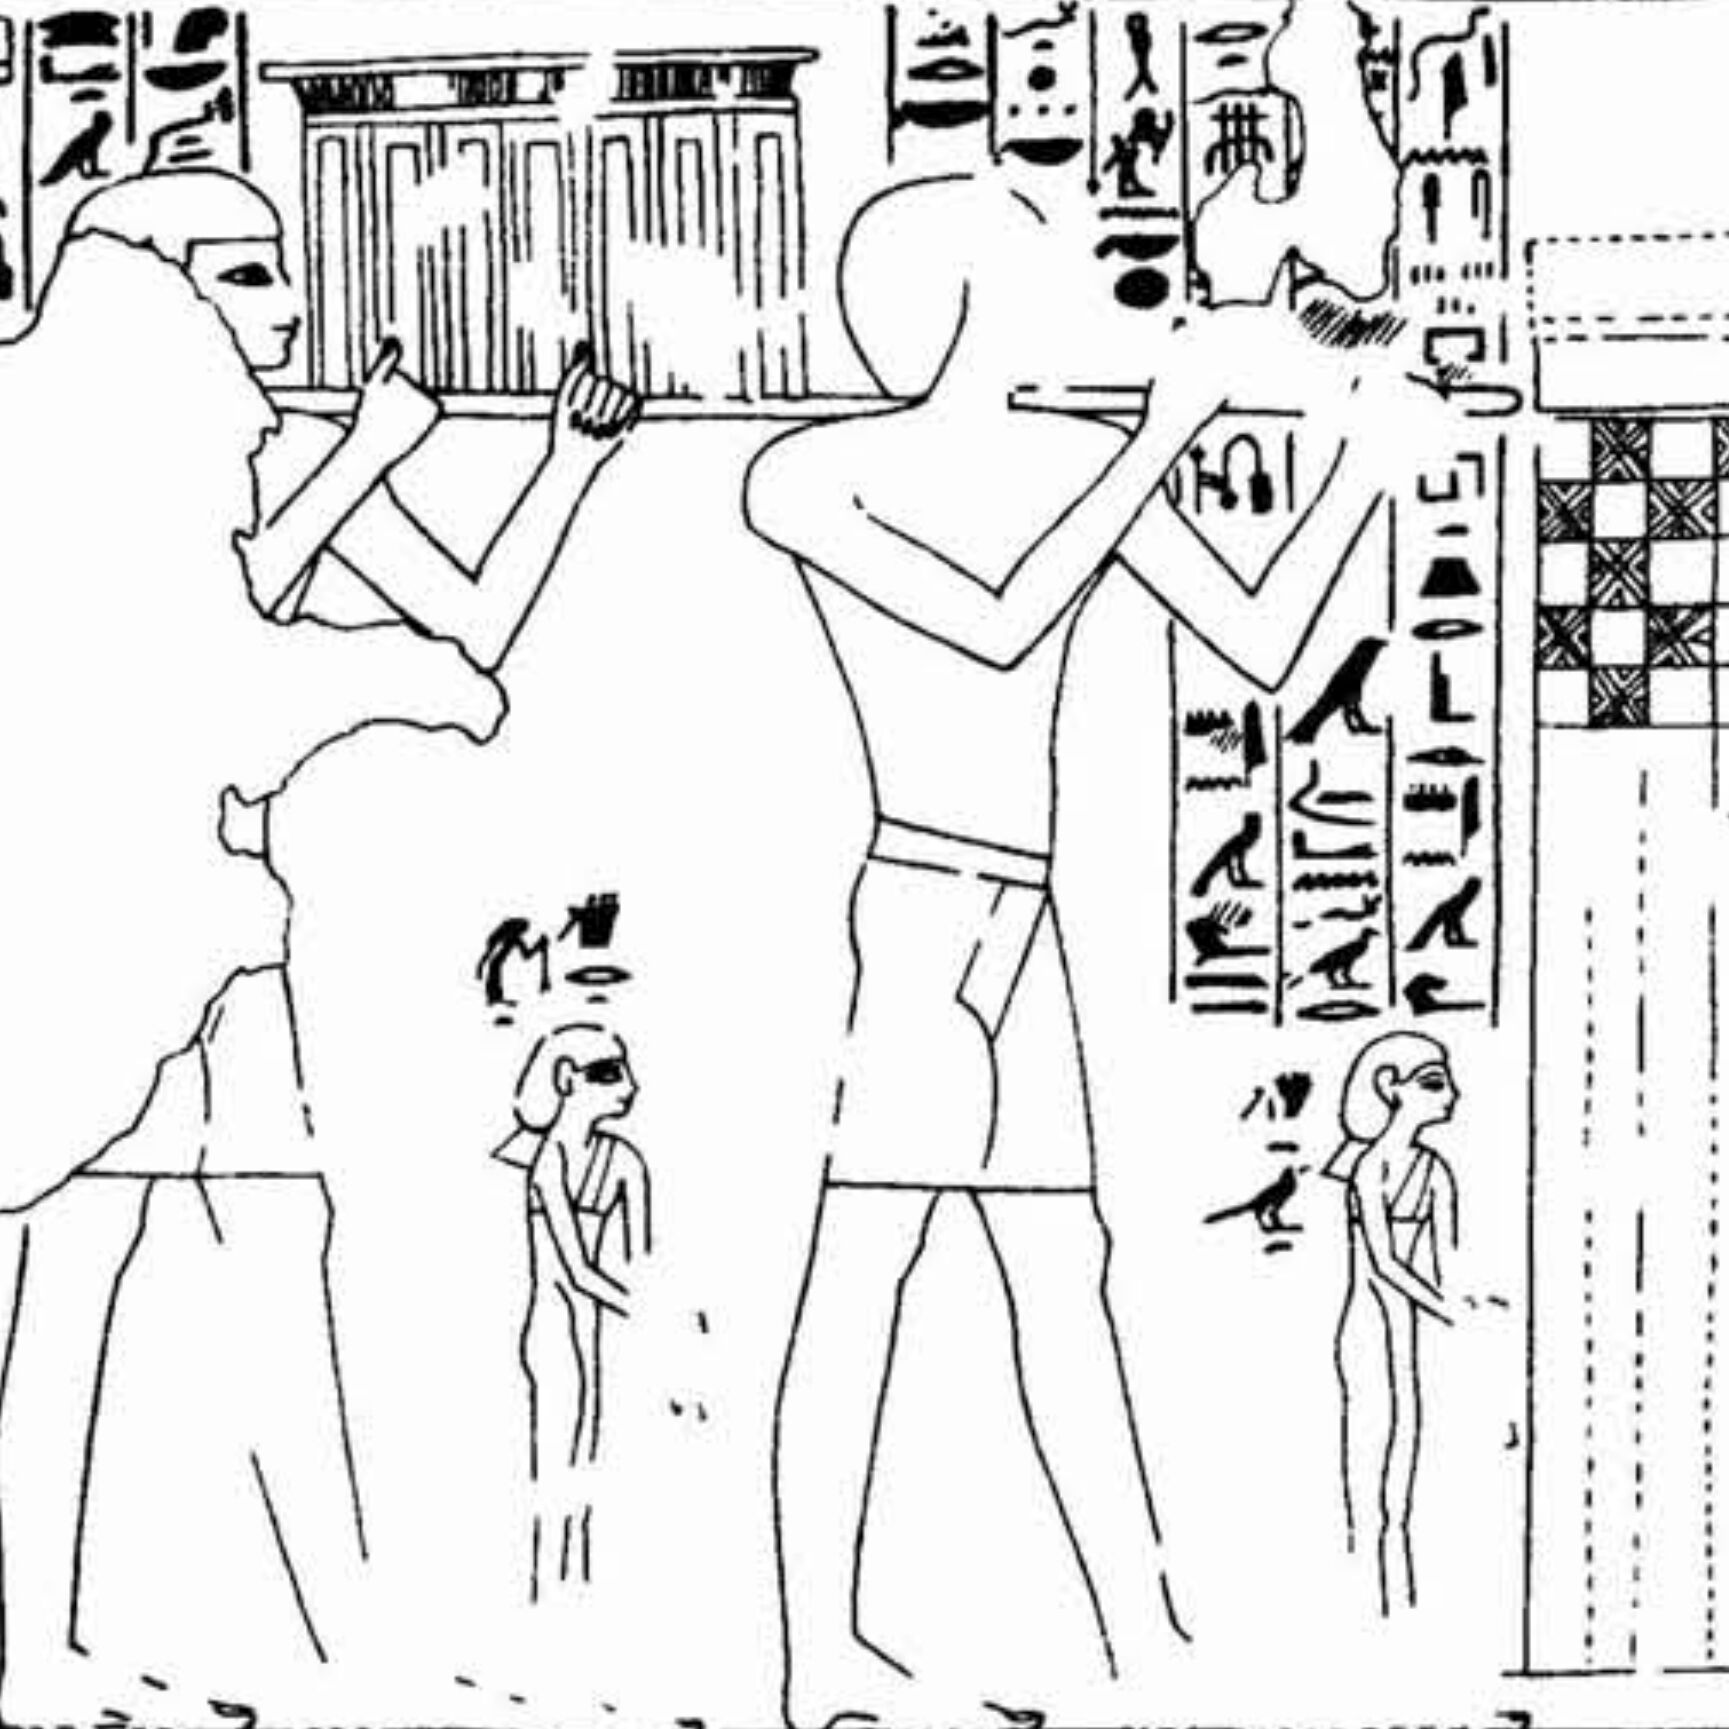 Theban Necropolis, Tomb of Amenemhat (TT 82), Wall painting, grayscale presentation